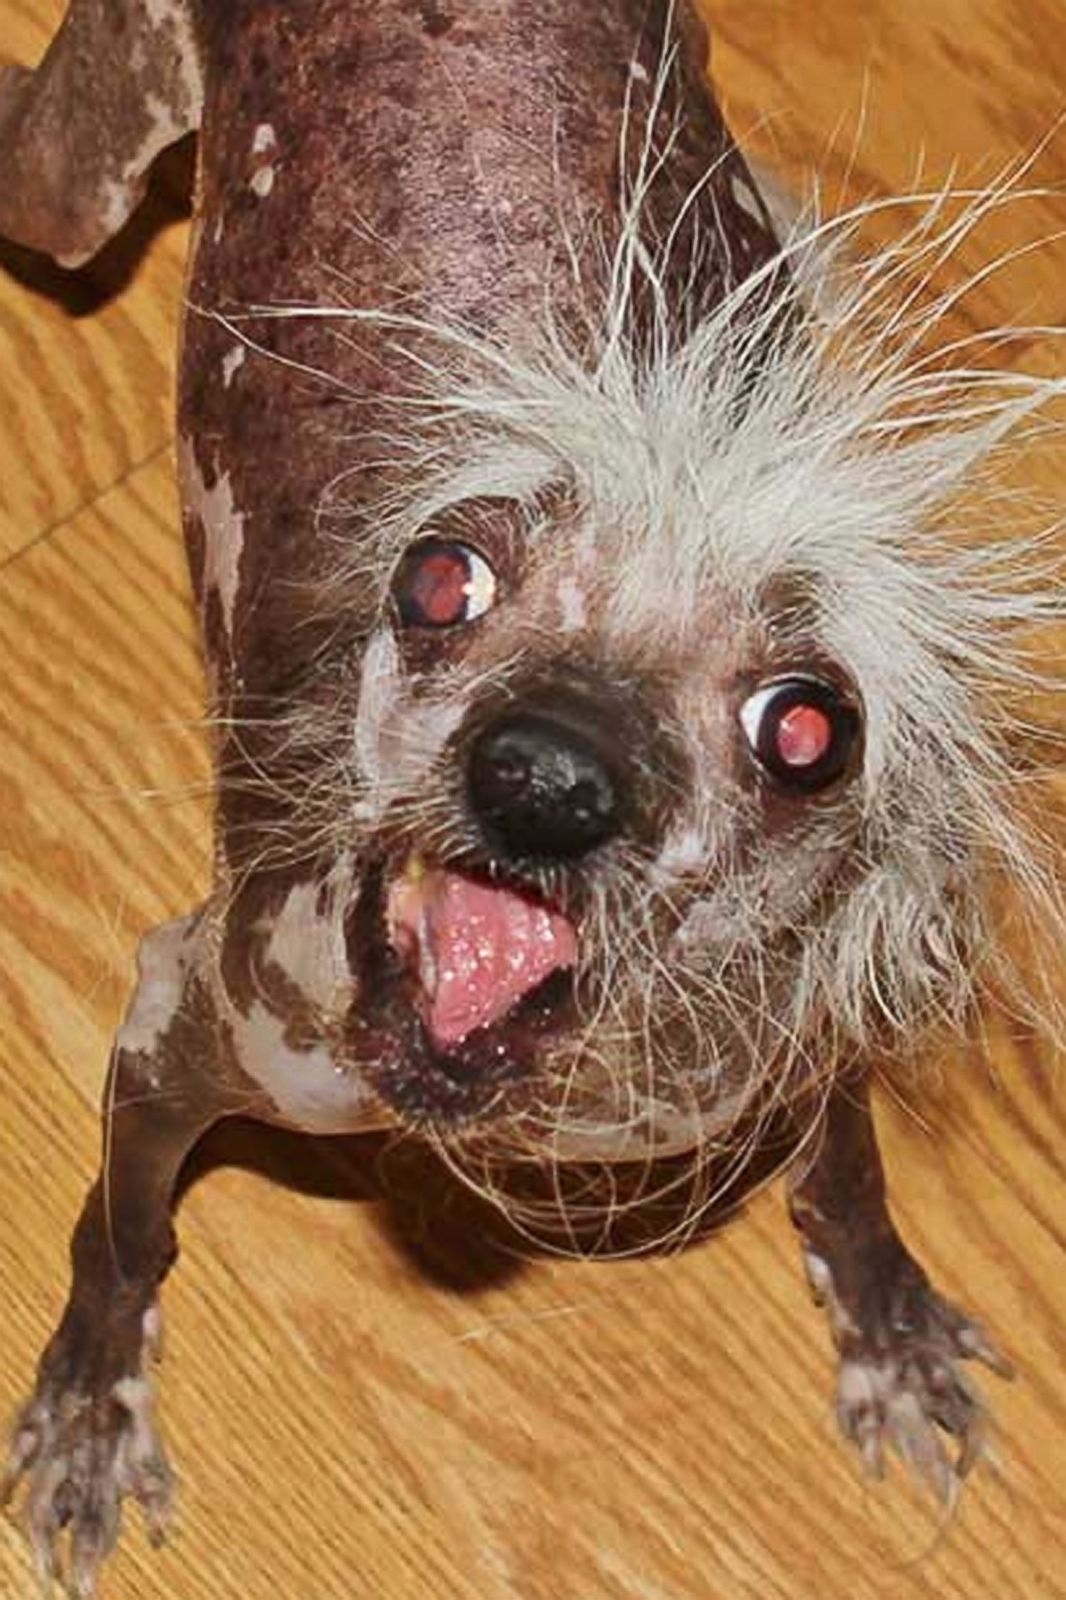 Meet the 'World's Ugliest Dog' Photos | Image #12 - ABC News